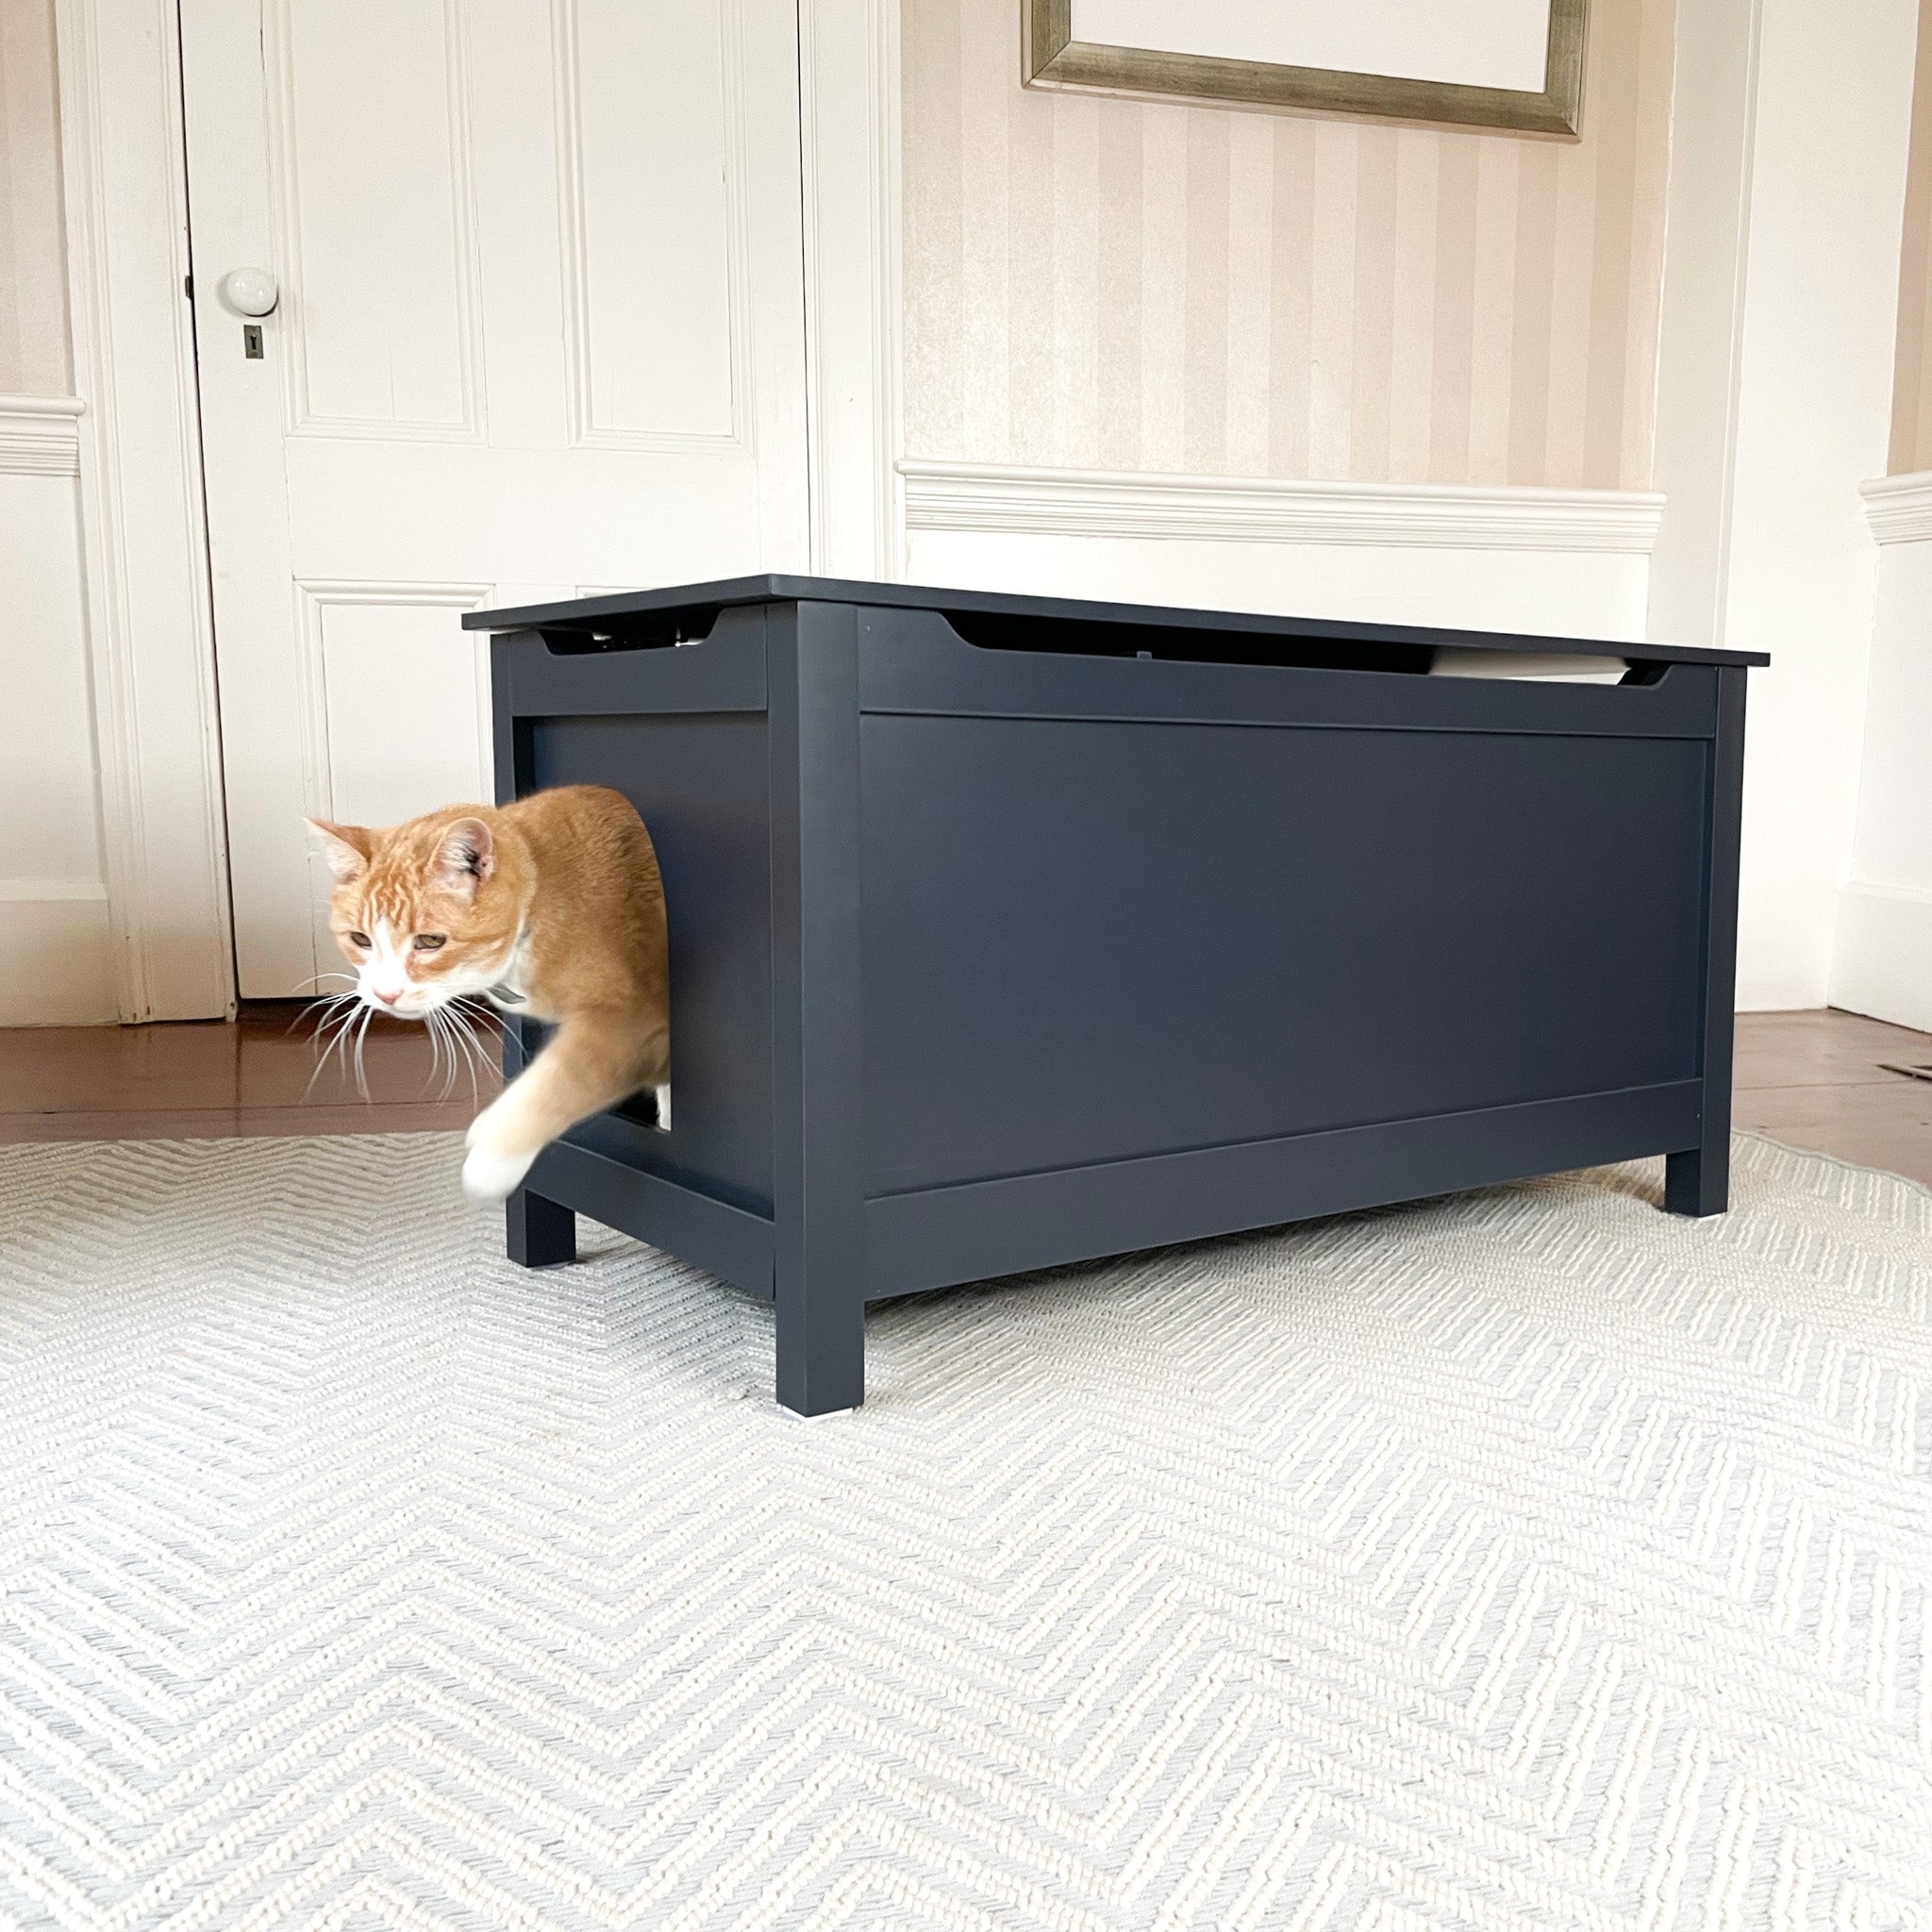 Designer Pet Products Parker Catbox Litter Box Enclosure in Charcoal Black